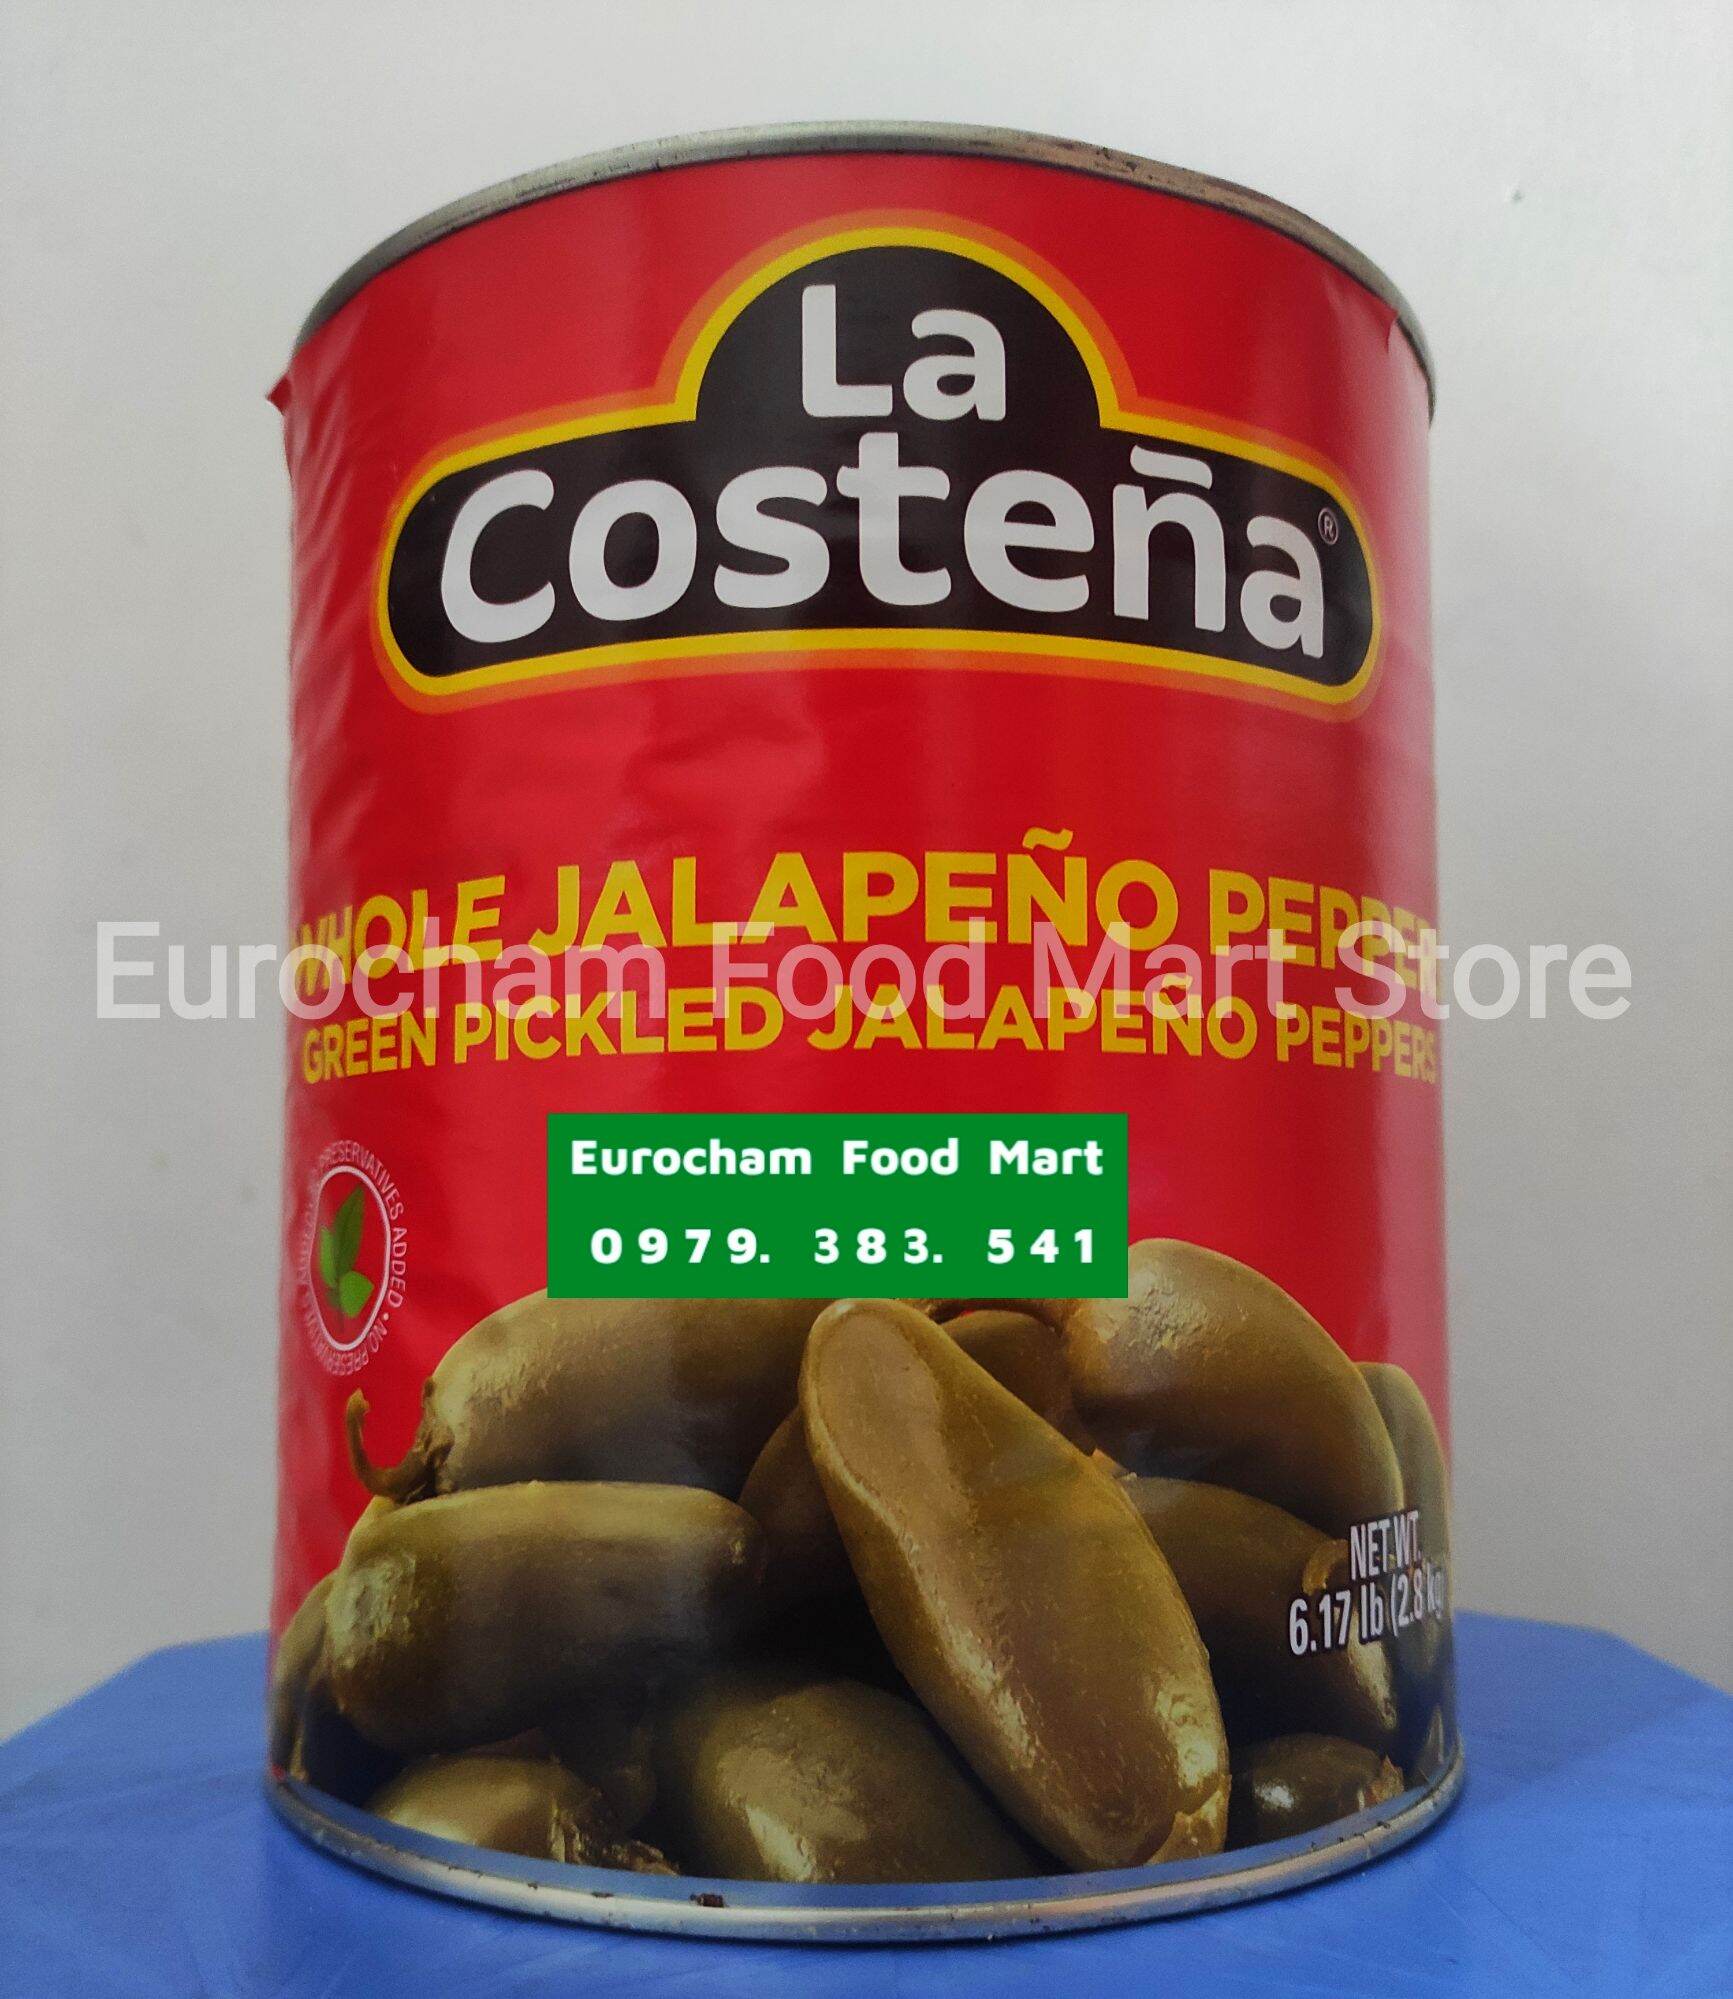 Ớt Xanh Ngâm Jalapeno Pepper Pickled Green hiệu La Costena hộp 2.8KG